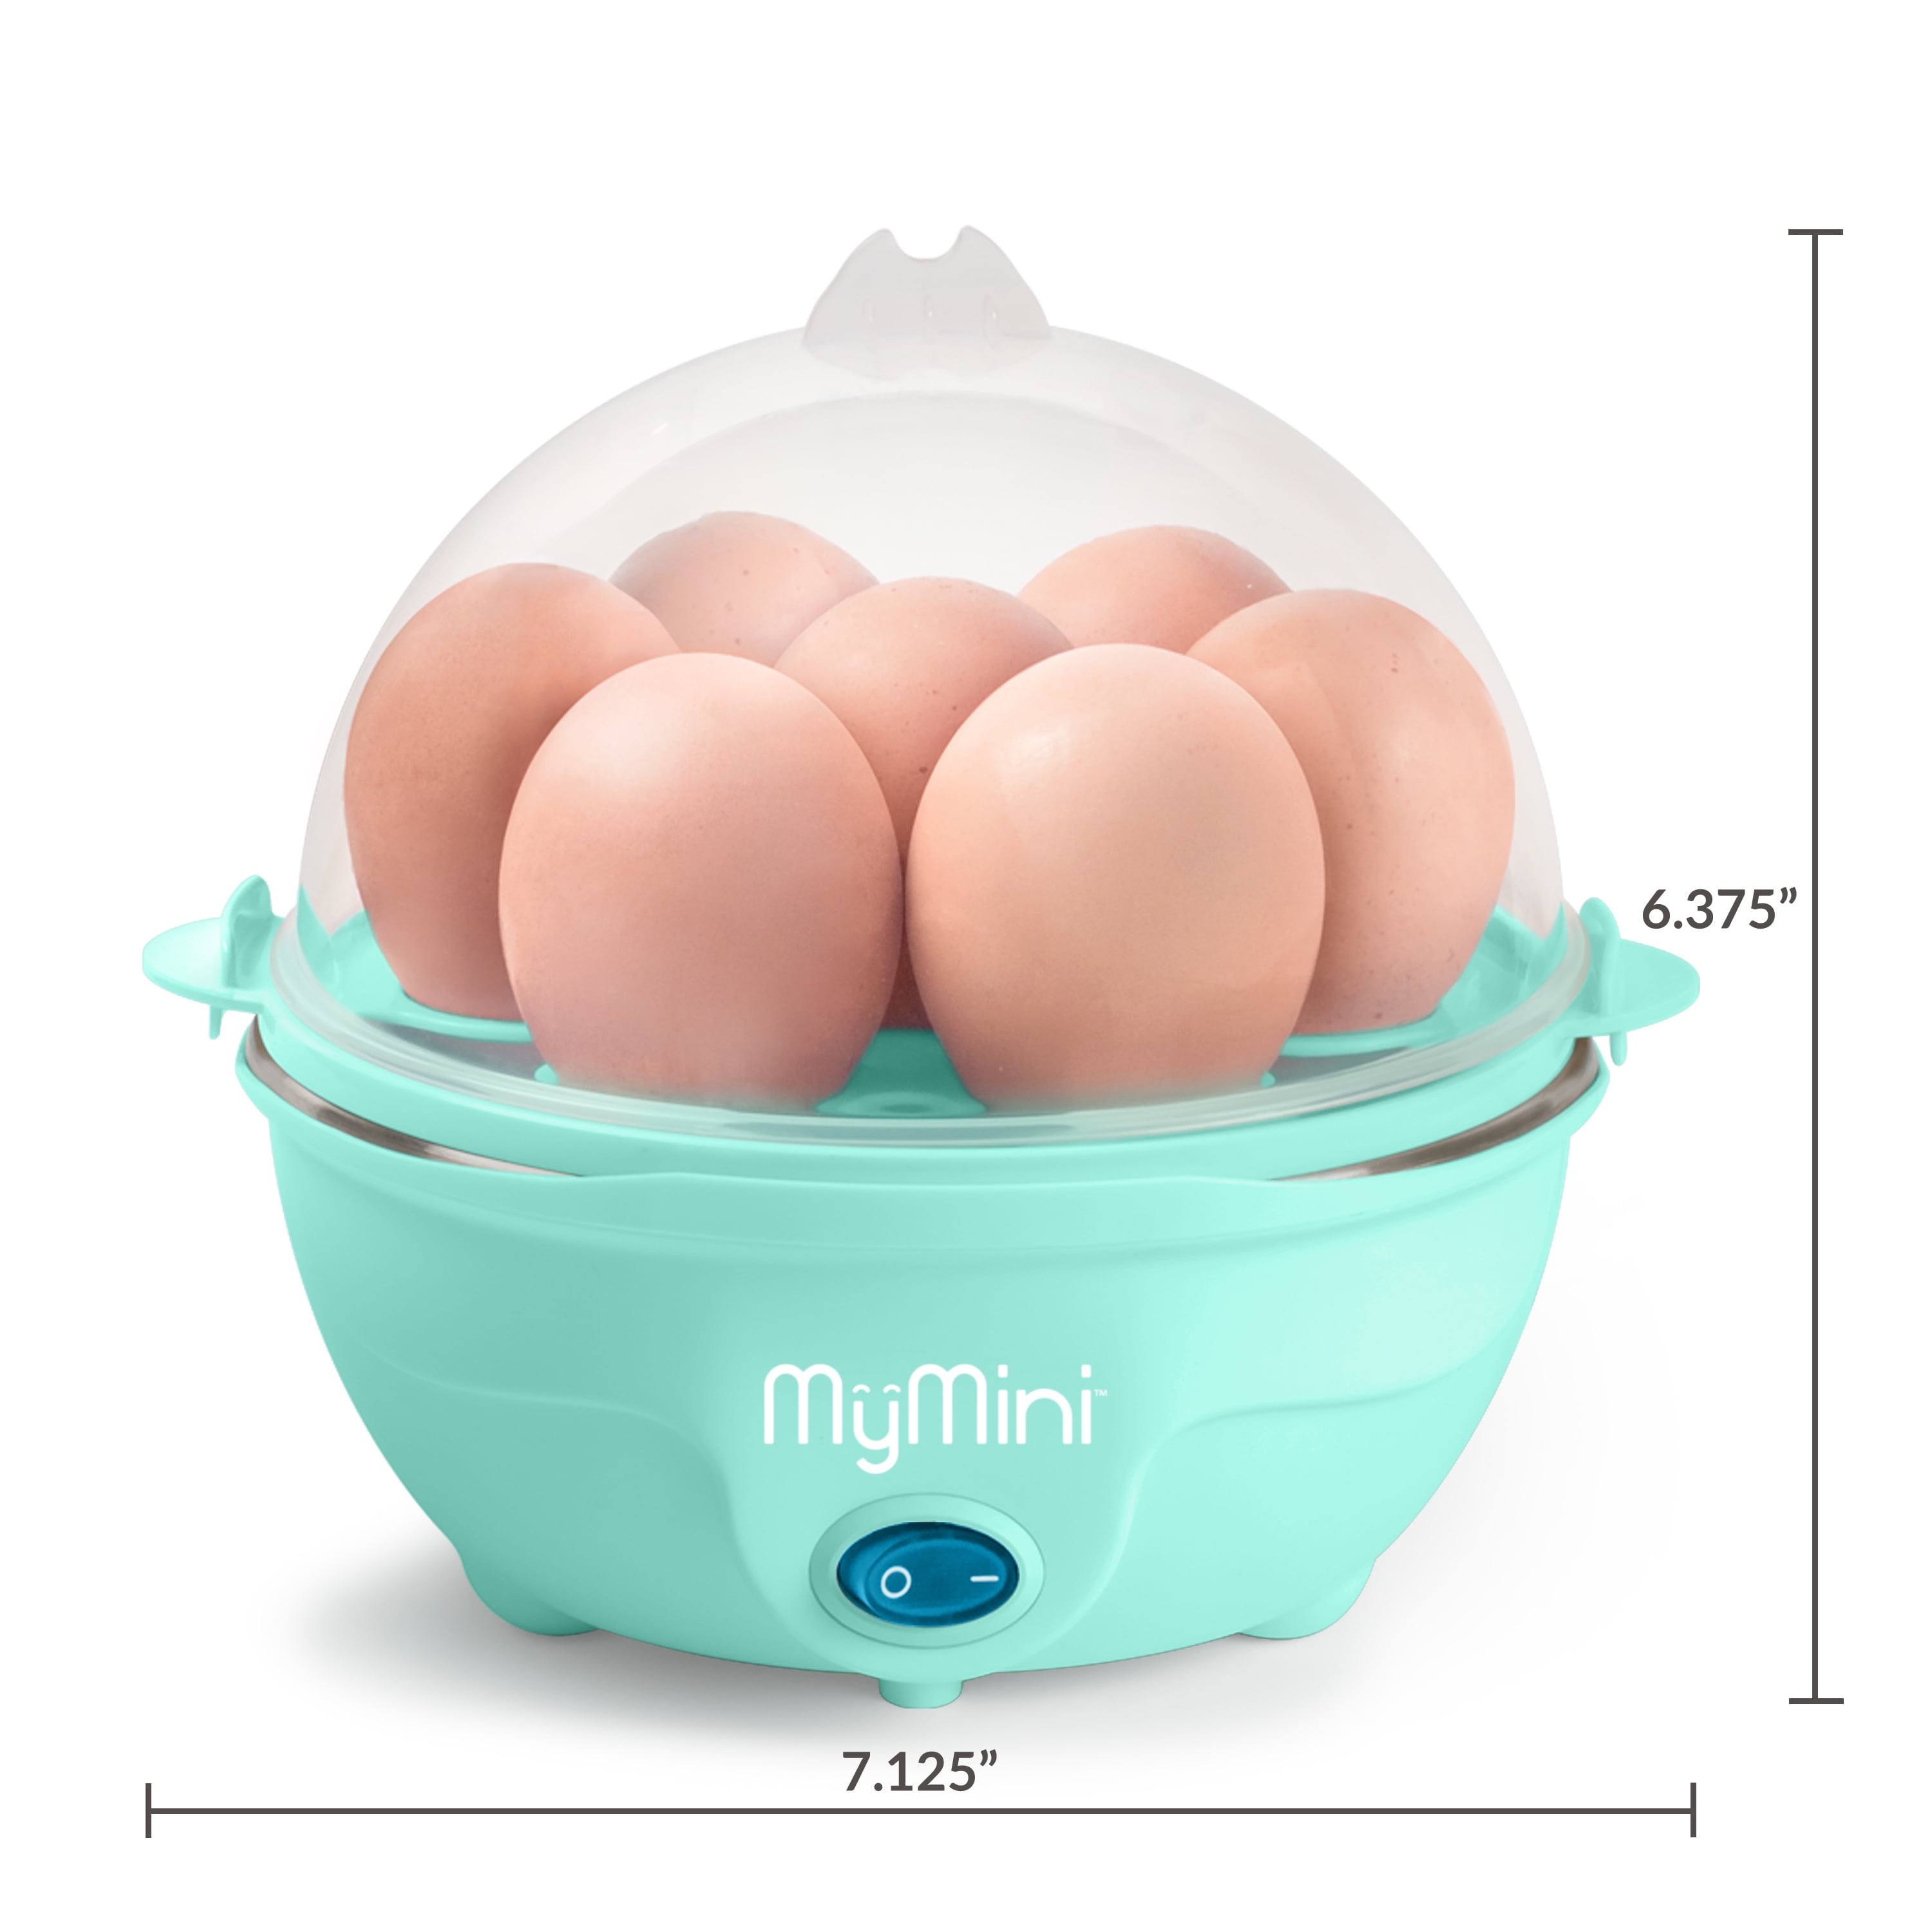 MINANOV Egg Maker - Electric Egg Cooker with Auto Shut Off and Alarm- Egg Maker Machine for Hard Boiled, Soft Boiled, Steamed Egg, Onsen Tamago 